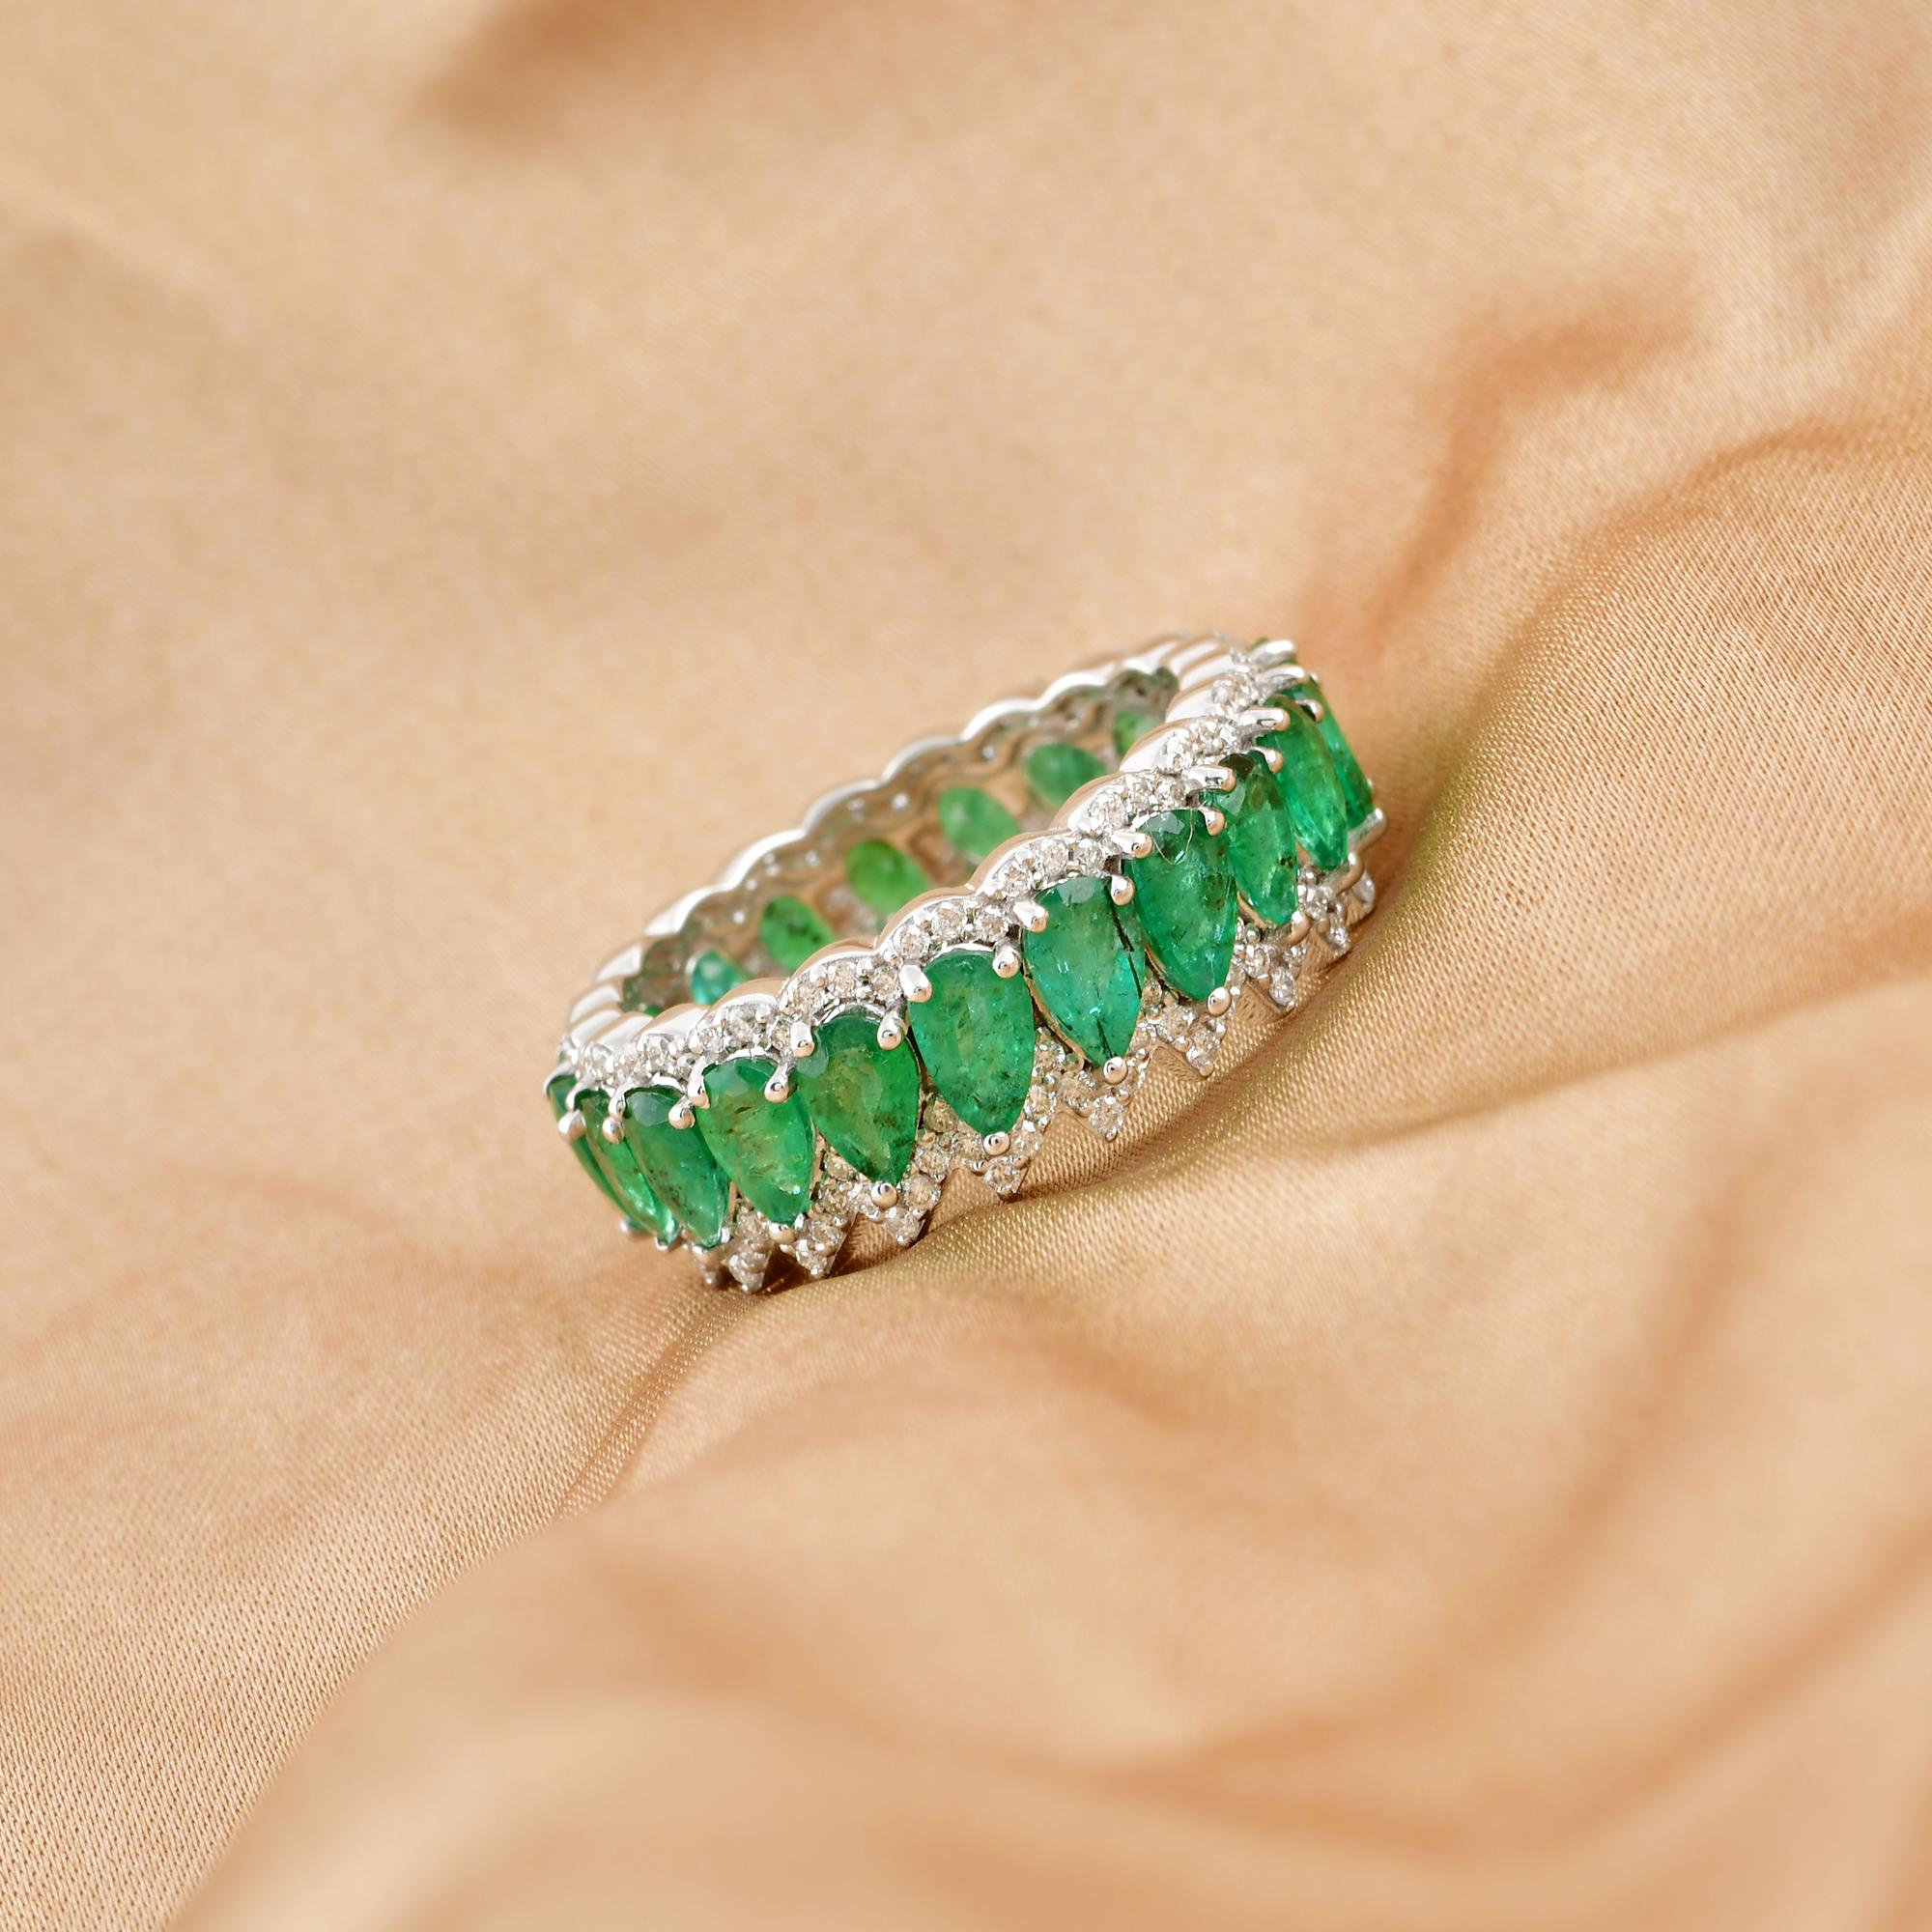 For Sale:  Pear Zambian Emerald Gemstone Band Ring Diamond 18 Karat White Gold Fine Jewelry 5